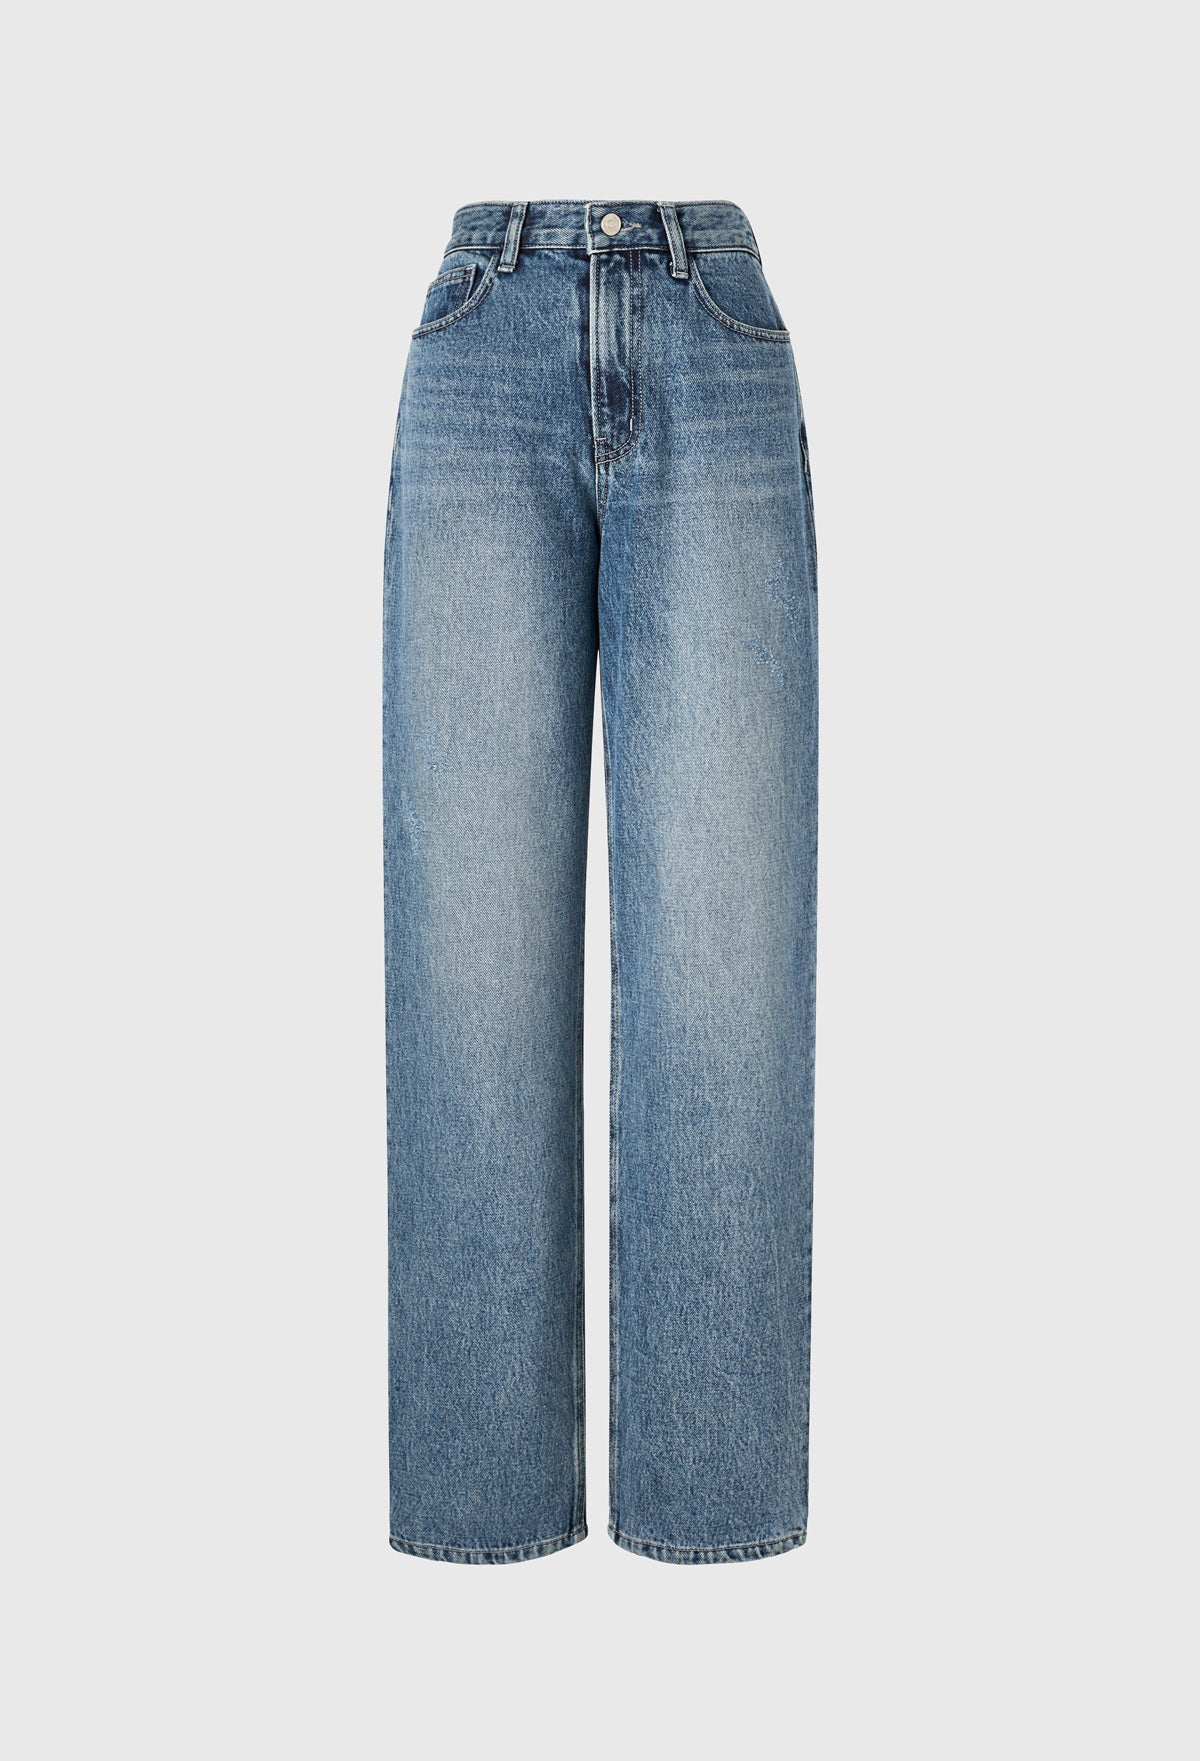 652 Straight-leg Denim Jeans